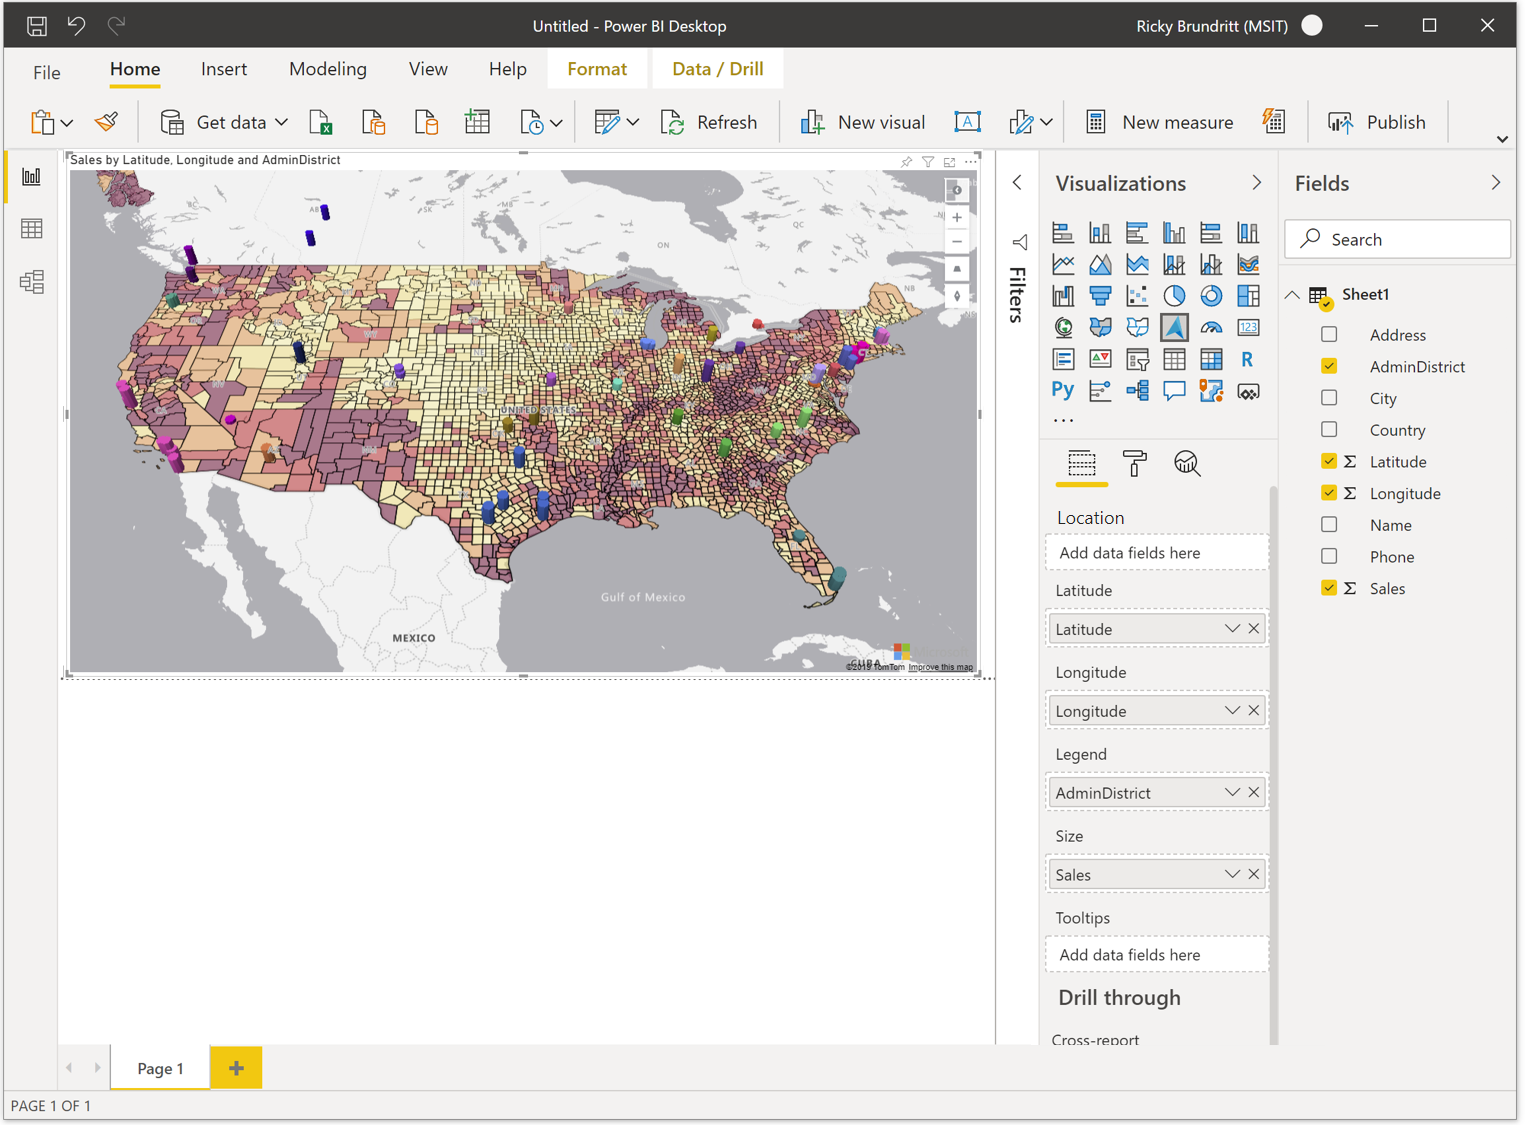 A screenshot of Power BI desktop with the Azure Maps Power BI visual displaying business data.